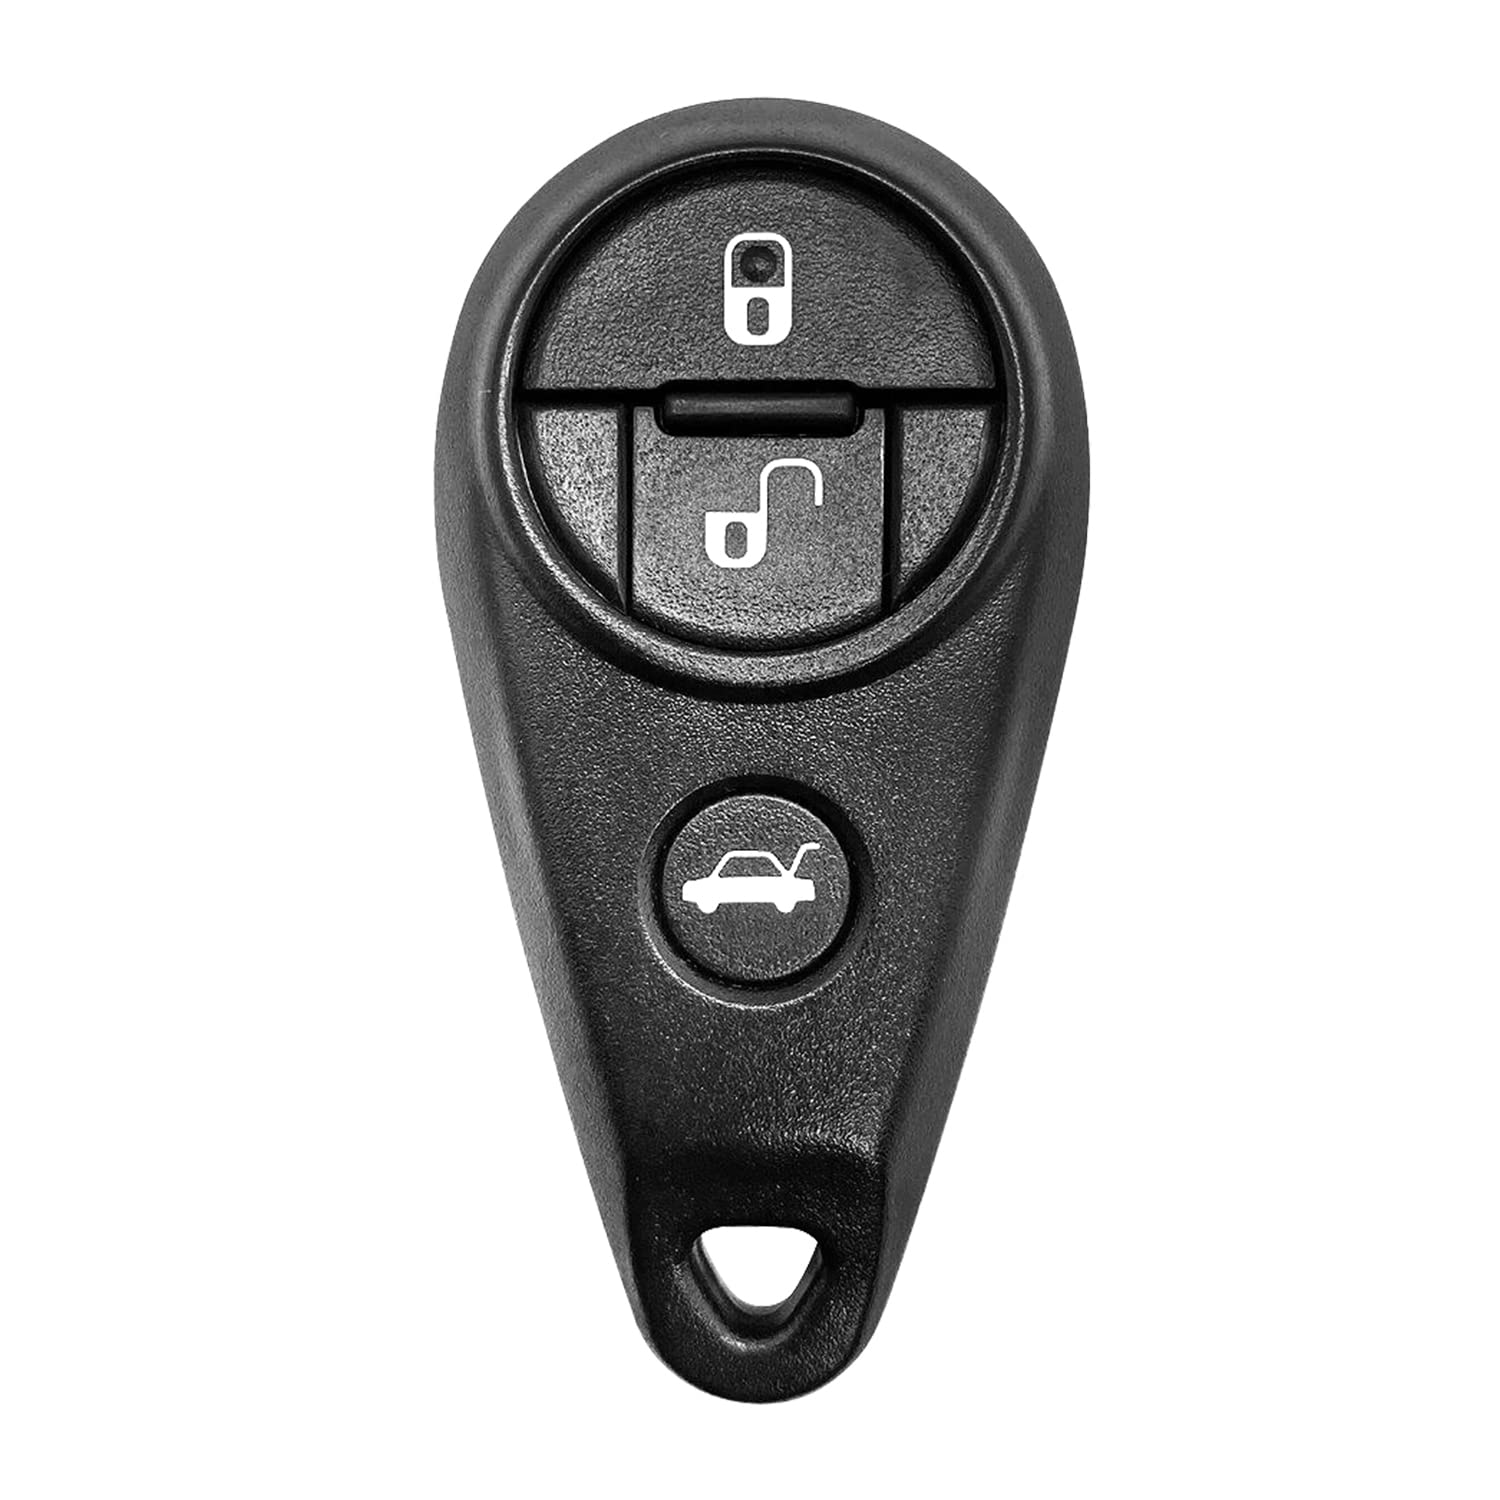 4 Button Keyless Entry Car Key Fob Remote for Subaru Forester Impreza 2008 2009 2010 2011 NHVWB1U711 88036 FG000